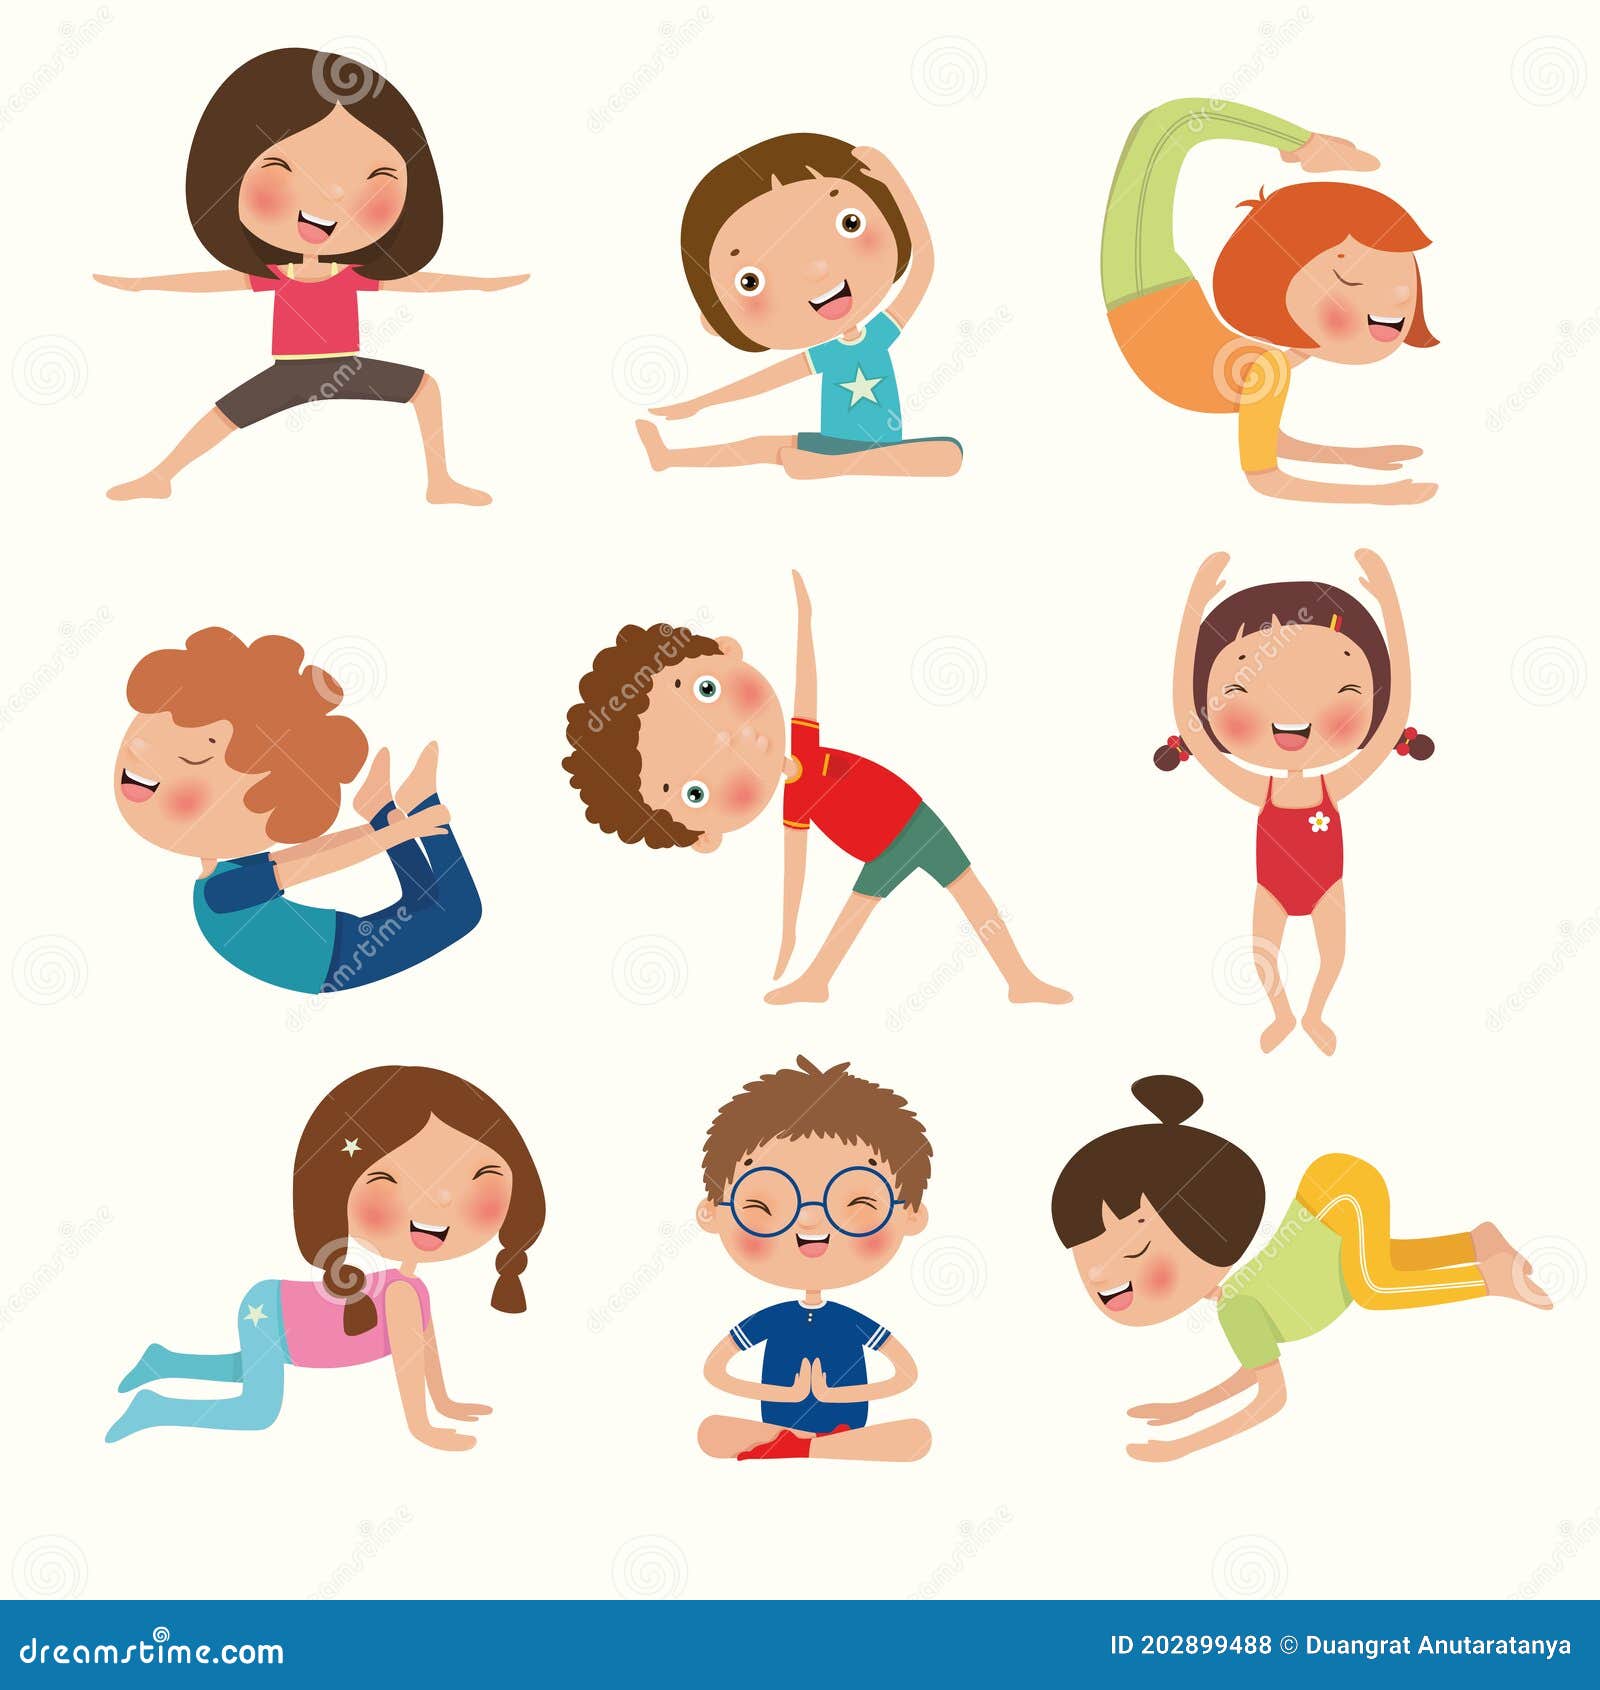 Yoga poses Vectors & Illustrations for Free Download | Freepik